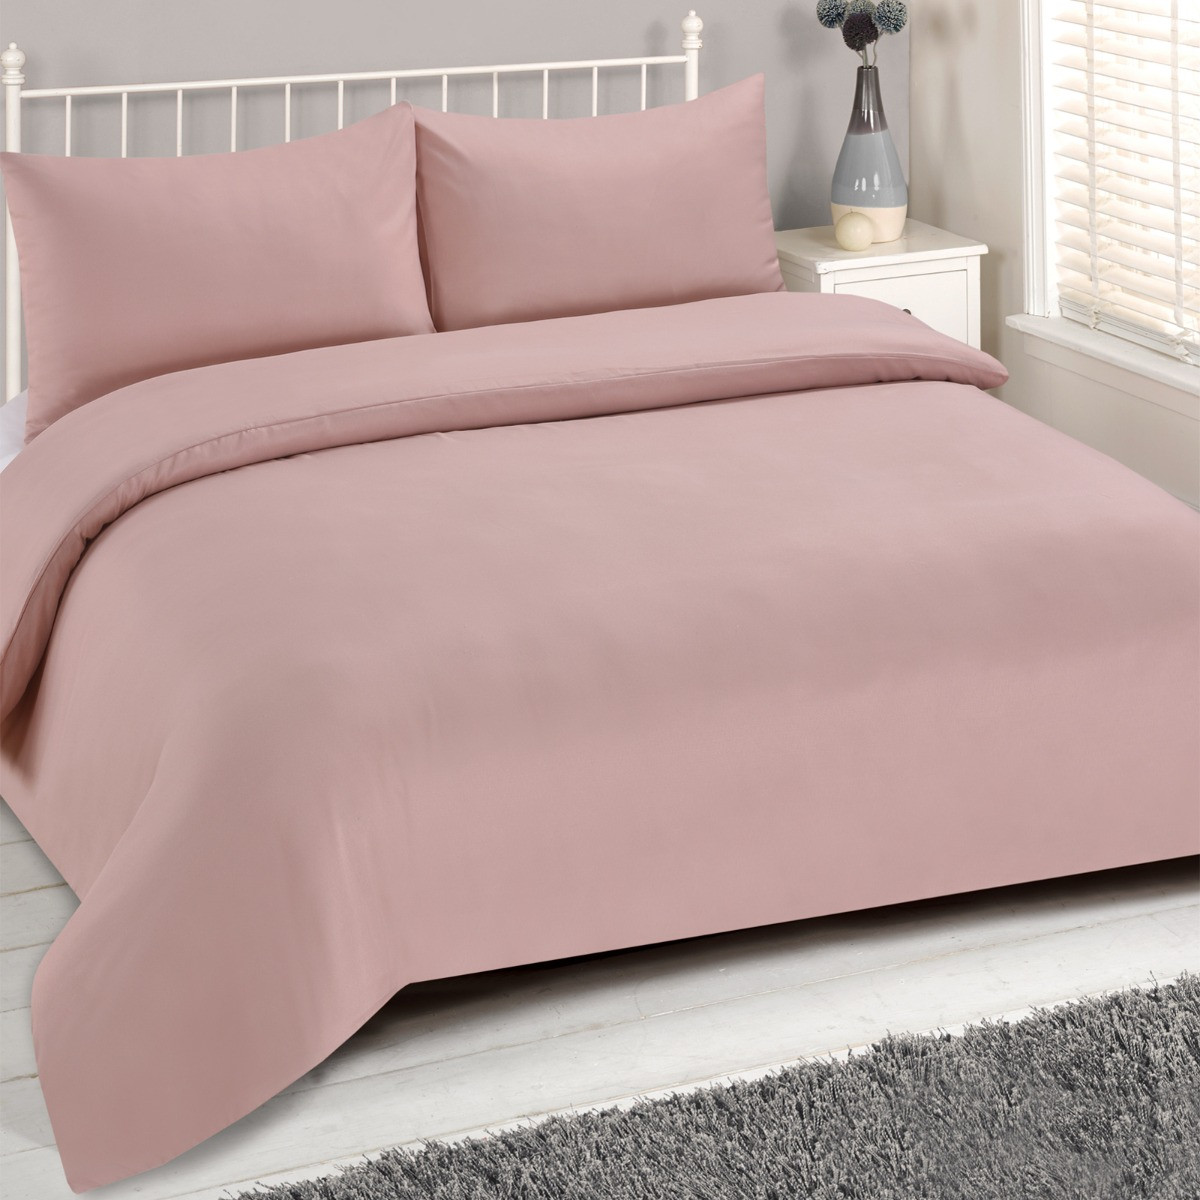 Brentfords Plain Dye Duvet Cover Set with Pillow Sham - Blush Pink>